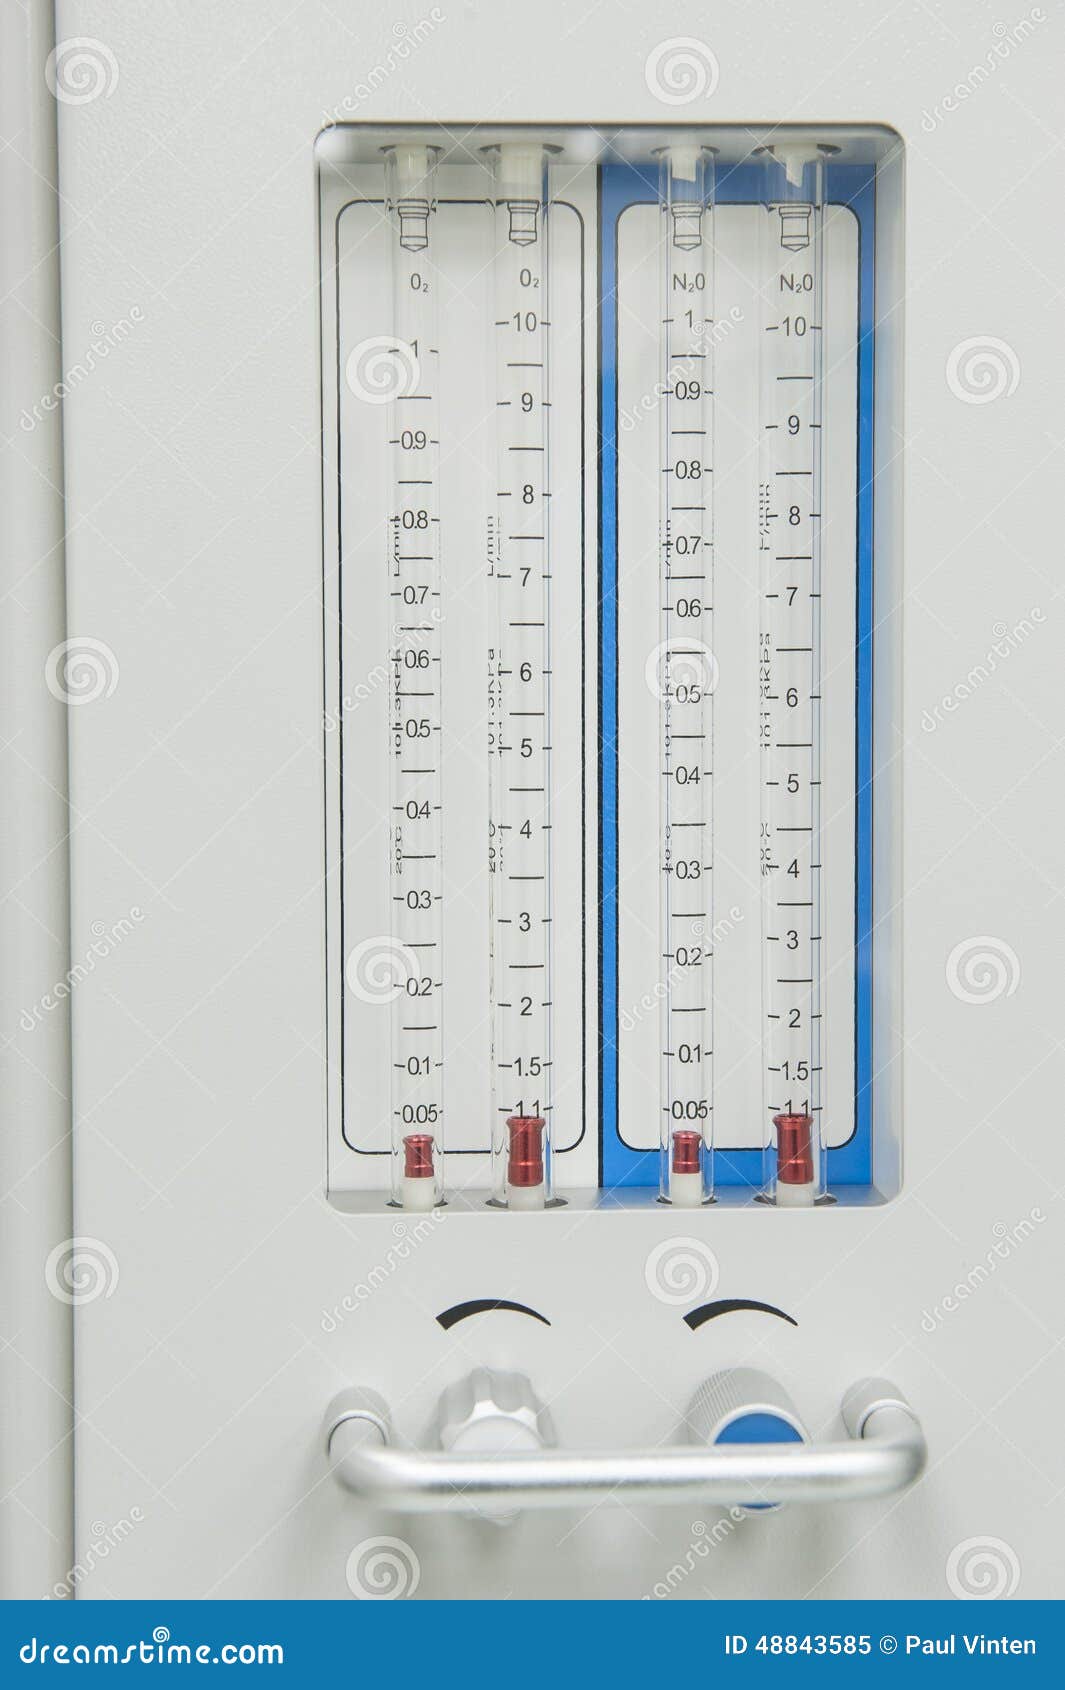 flowmeter on medical hospital anesthetic machine